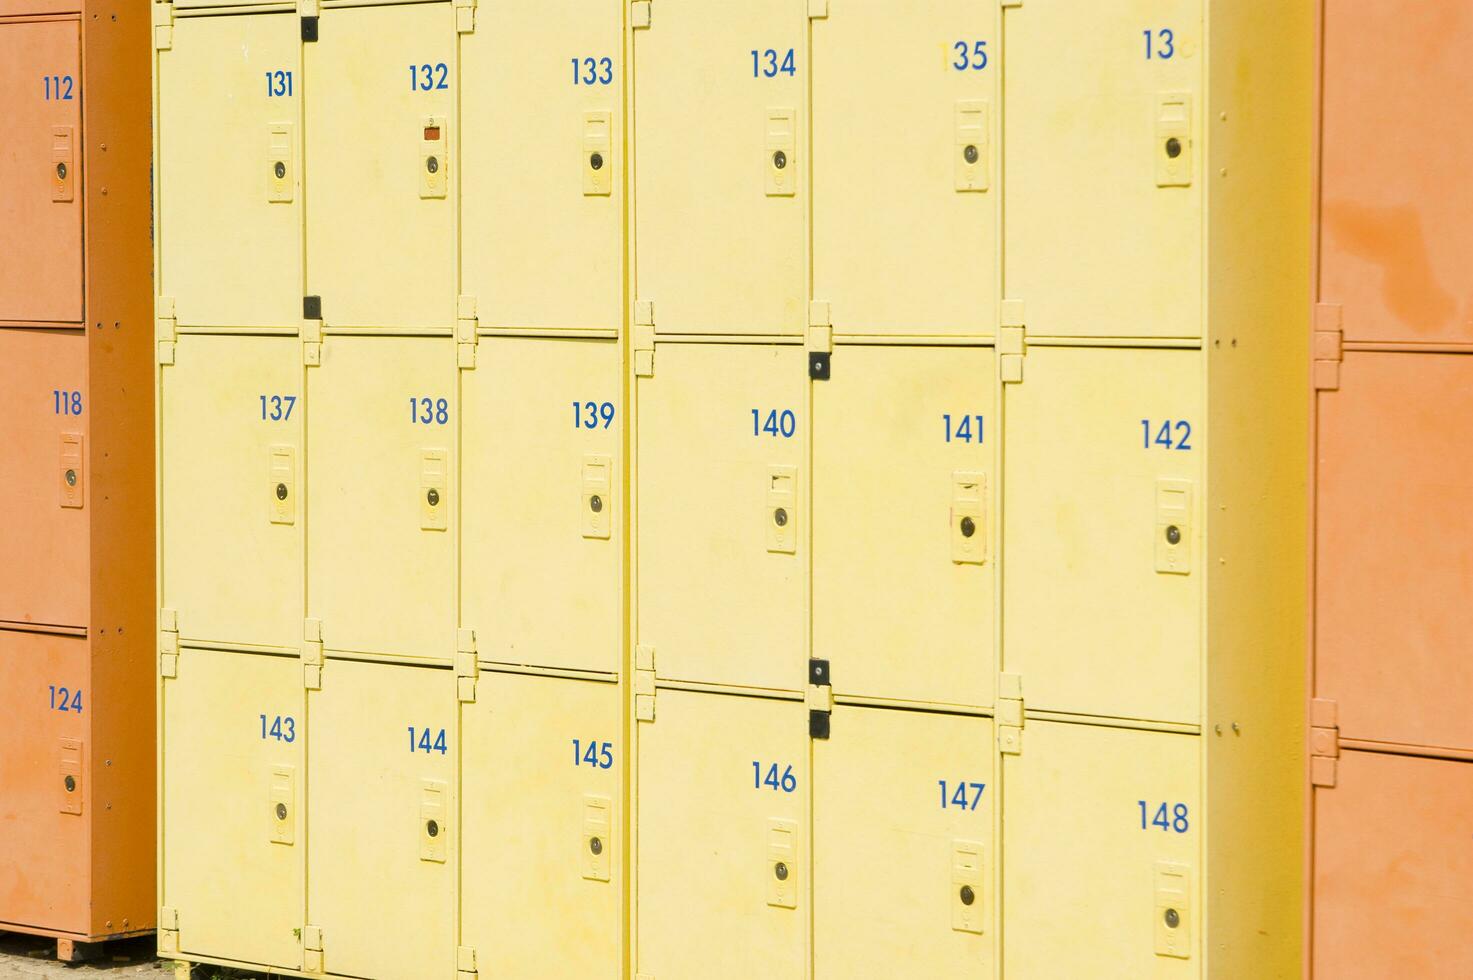 a row of yellow and orange lockers photo